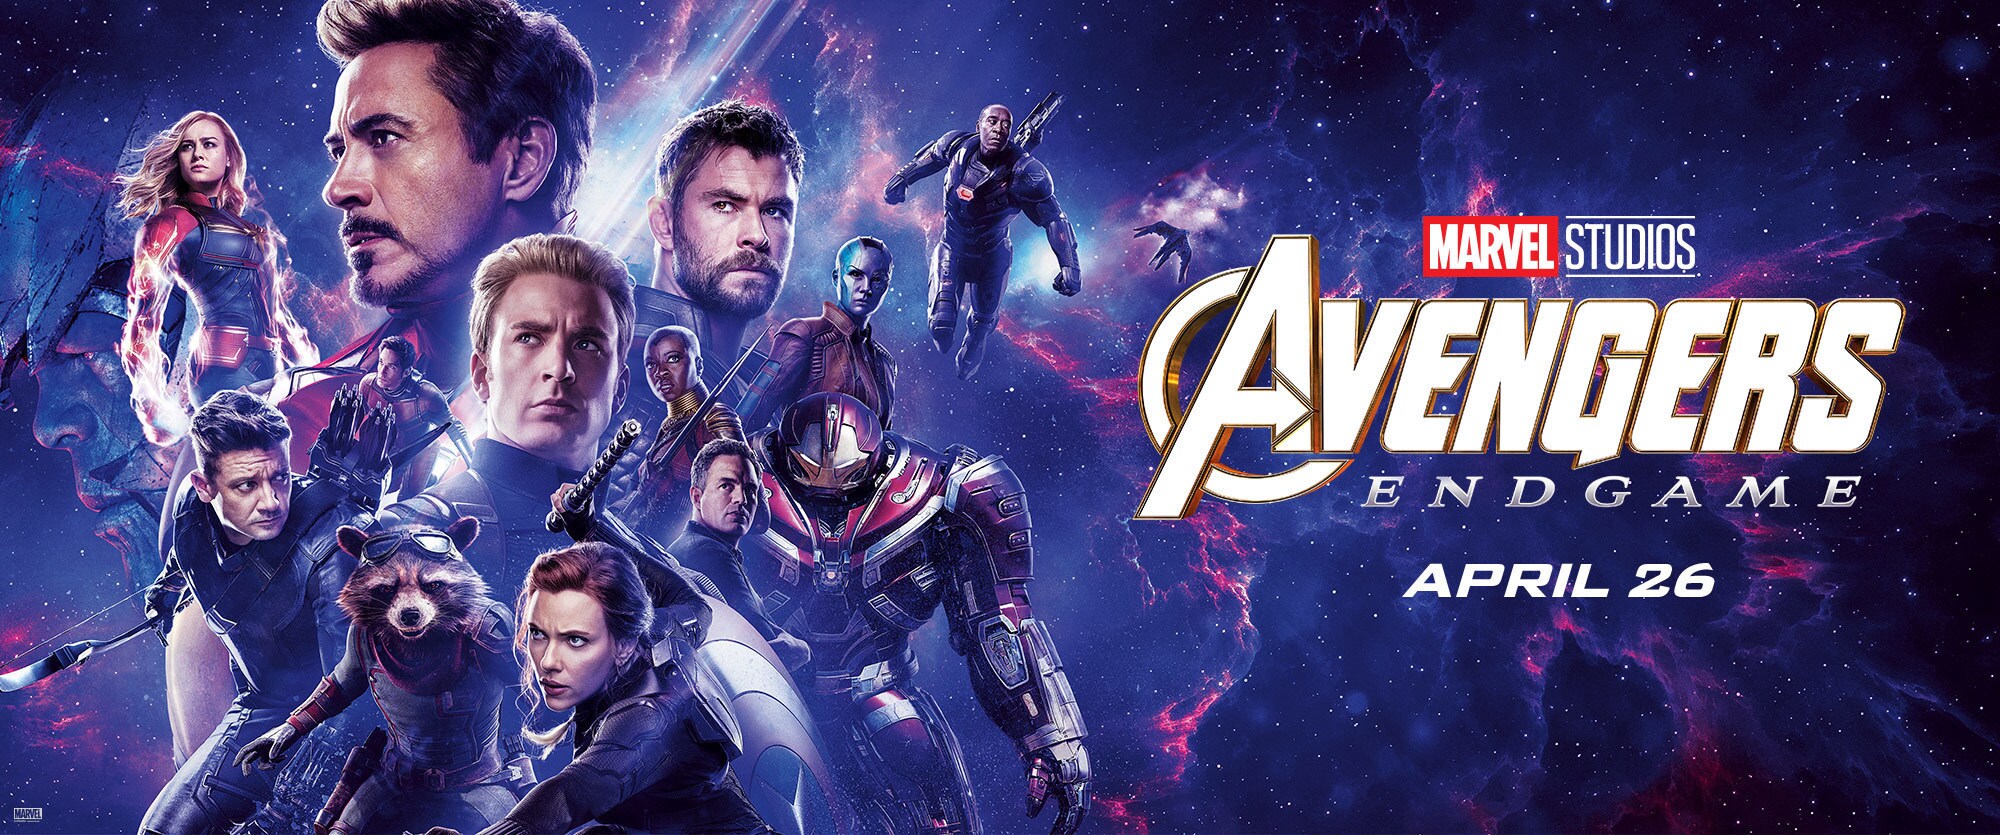 Avengers: Endgame_Movie Page_Hero Banner2